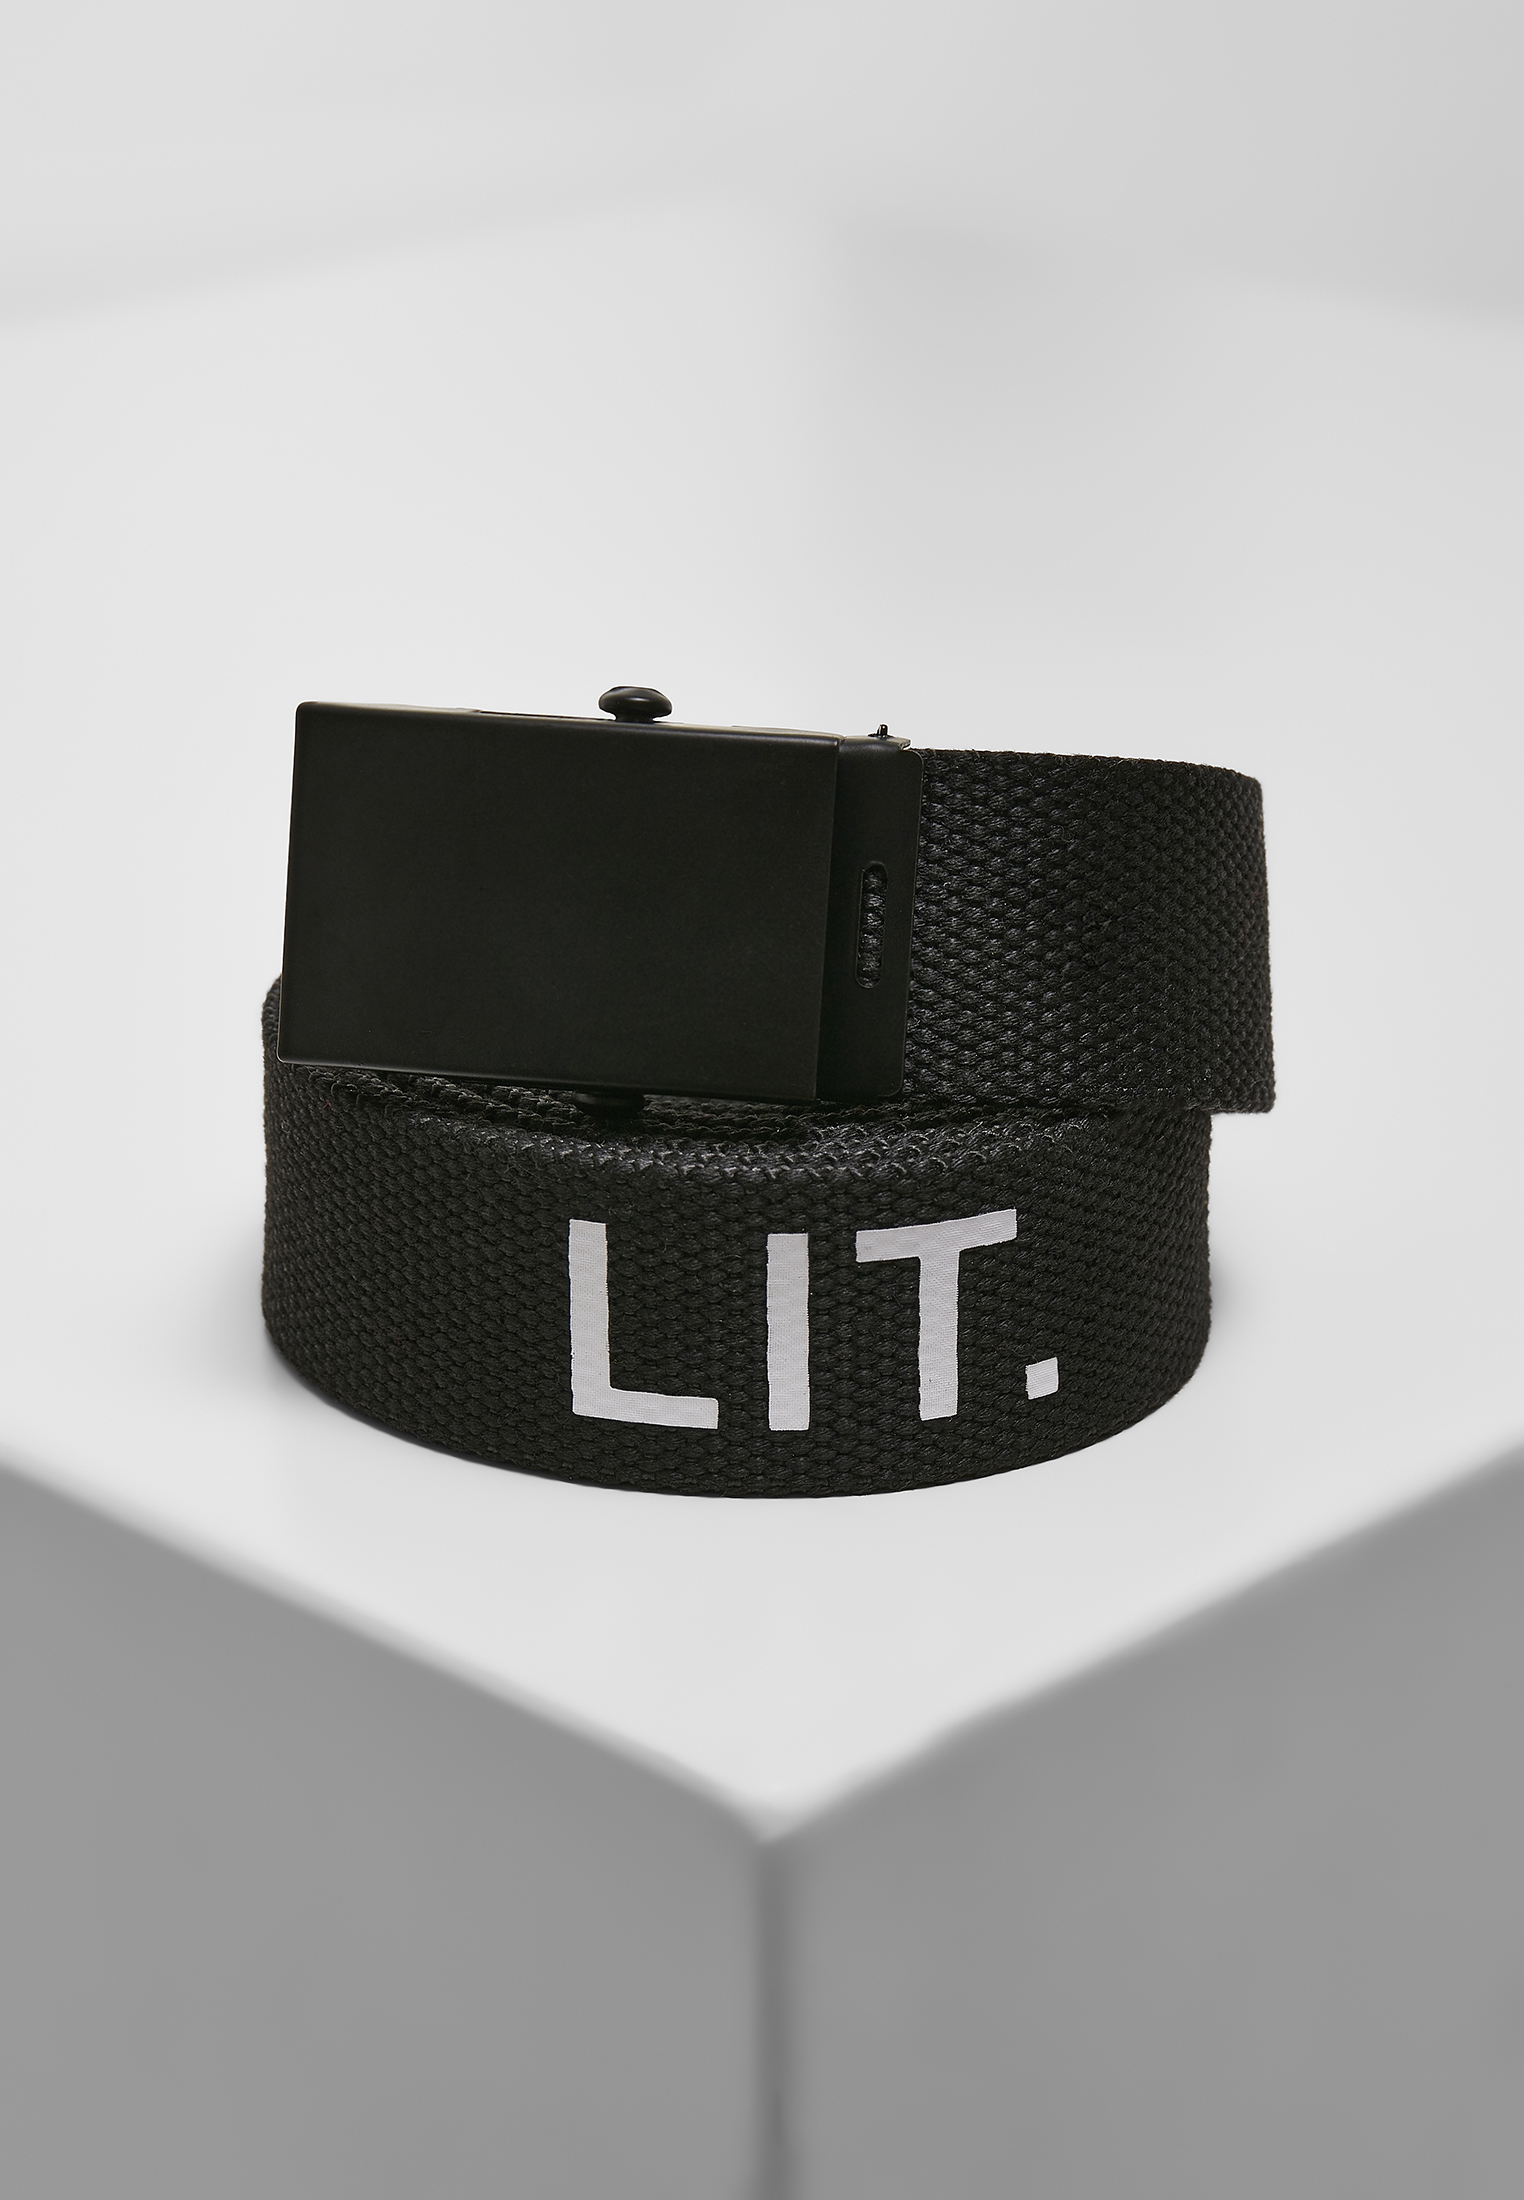 LIT Strap Extra Long Black